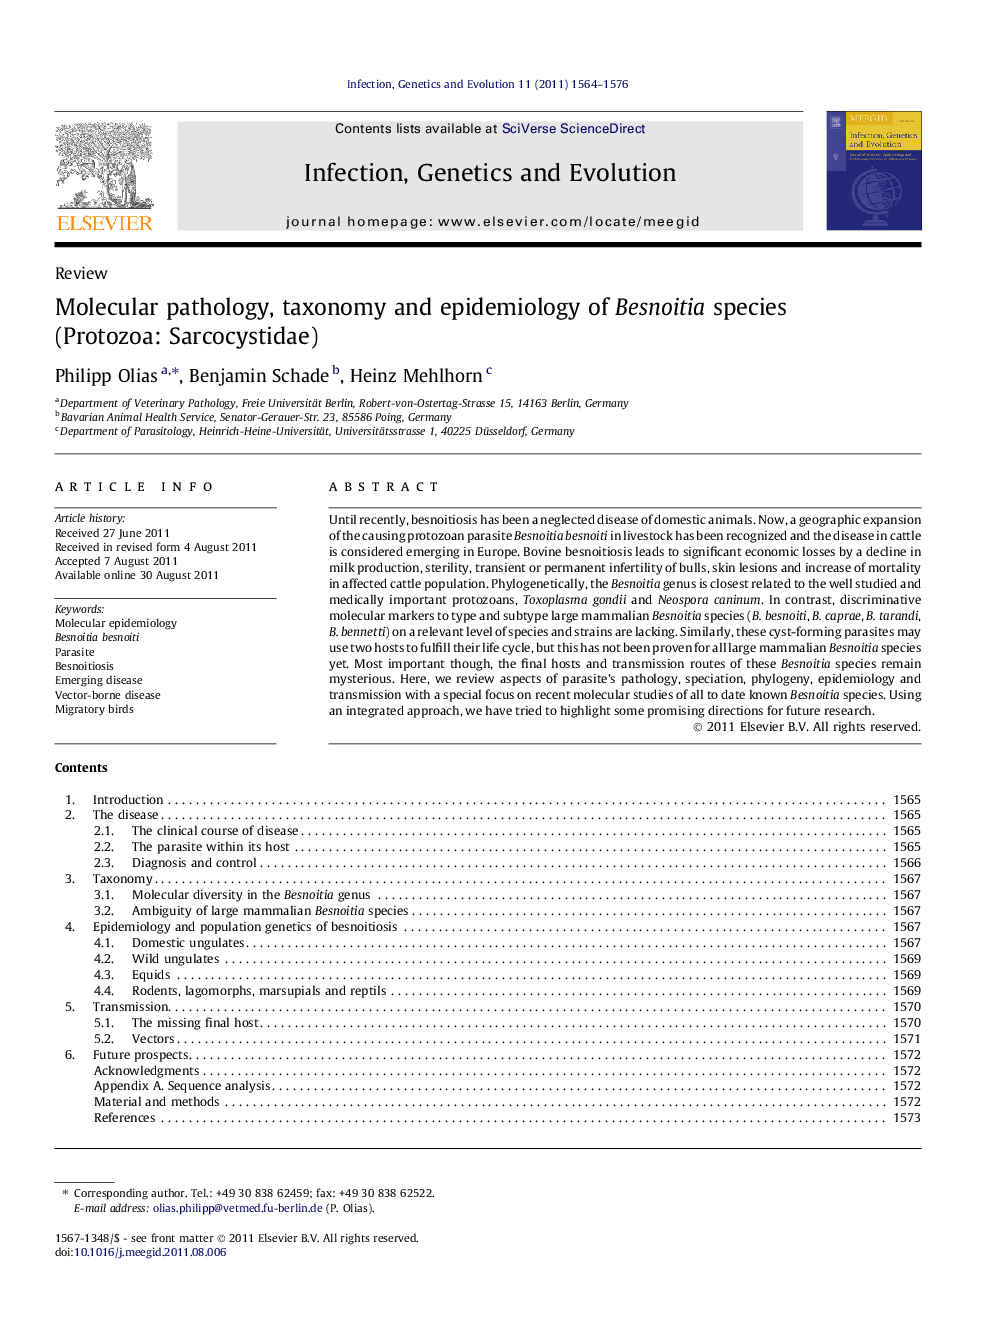 Molecular pathology, taxonomy and epidemiology of Besnoitia species (Protozoa: Sarcocystidae)